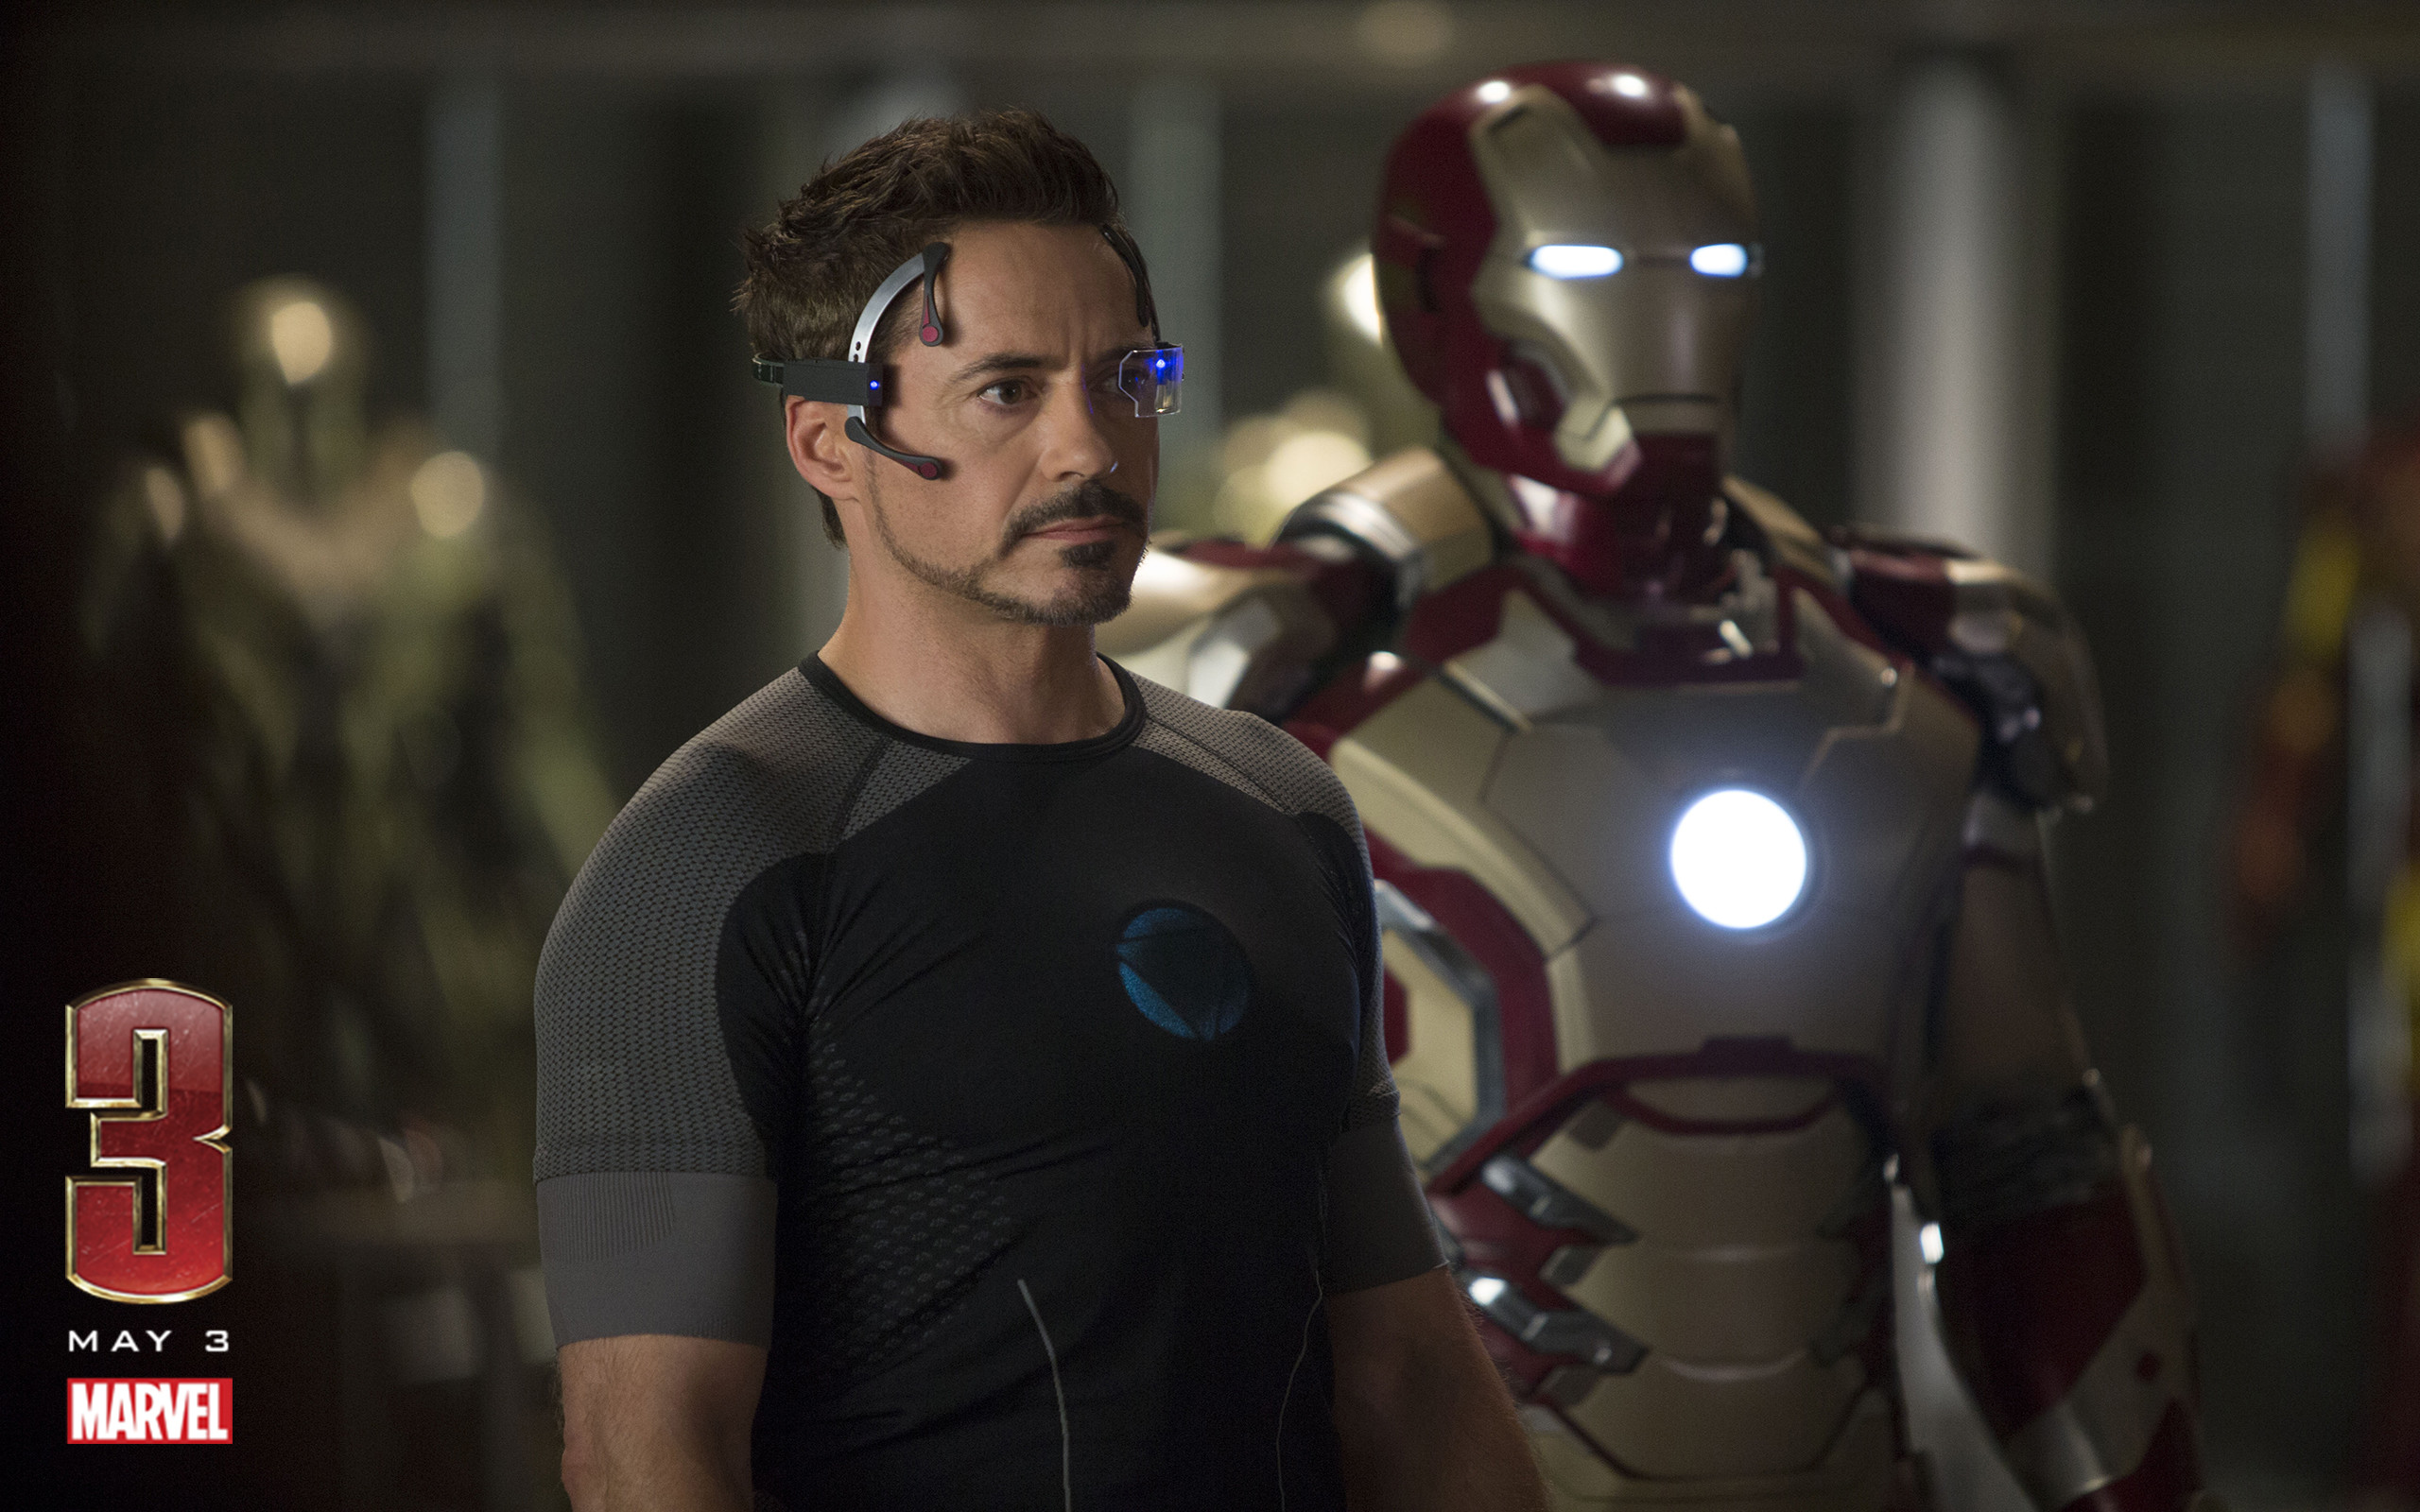 2560x1600 Bild: Tony Stark und Iron Man Anzug wallpapers and stock photos. Â«